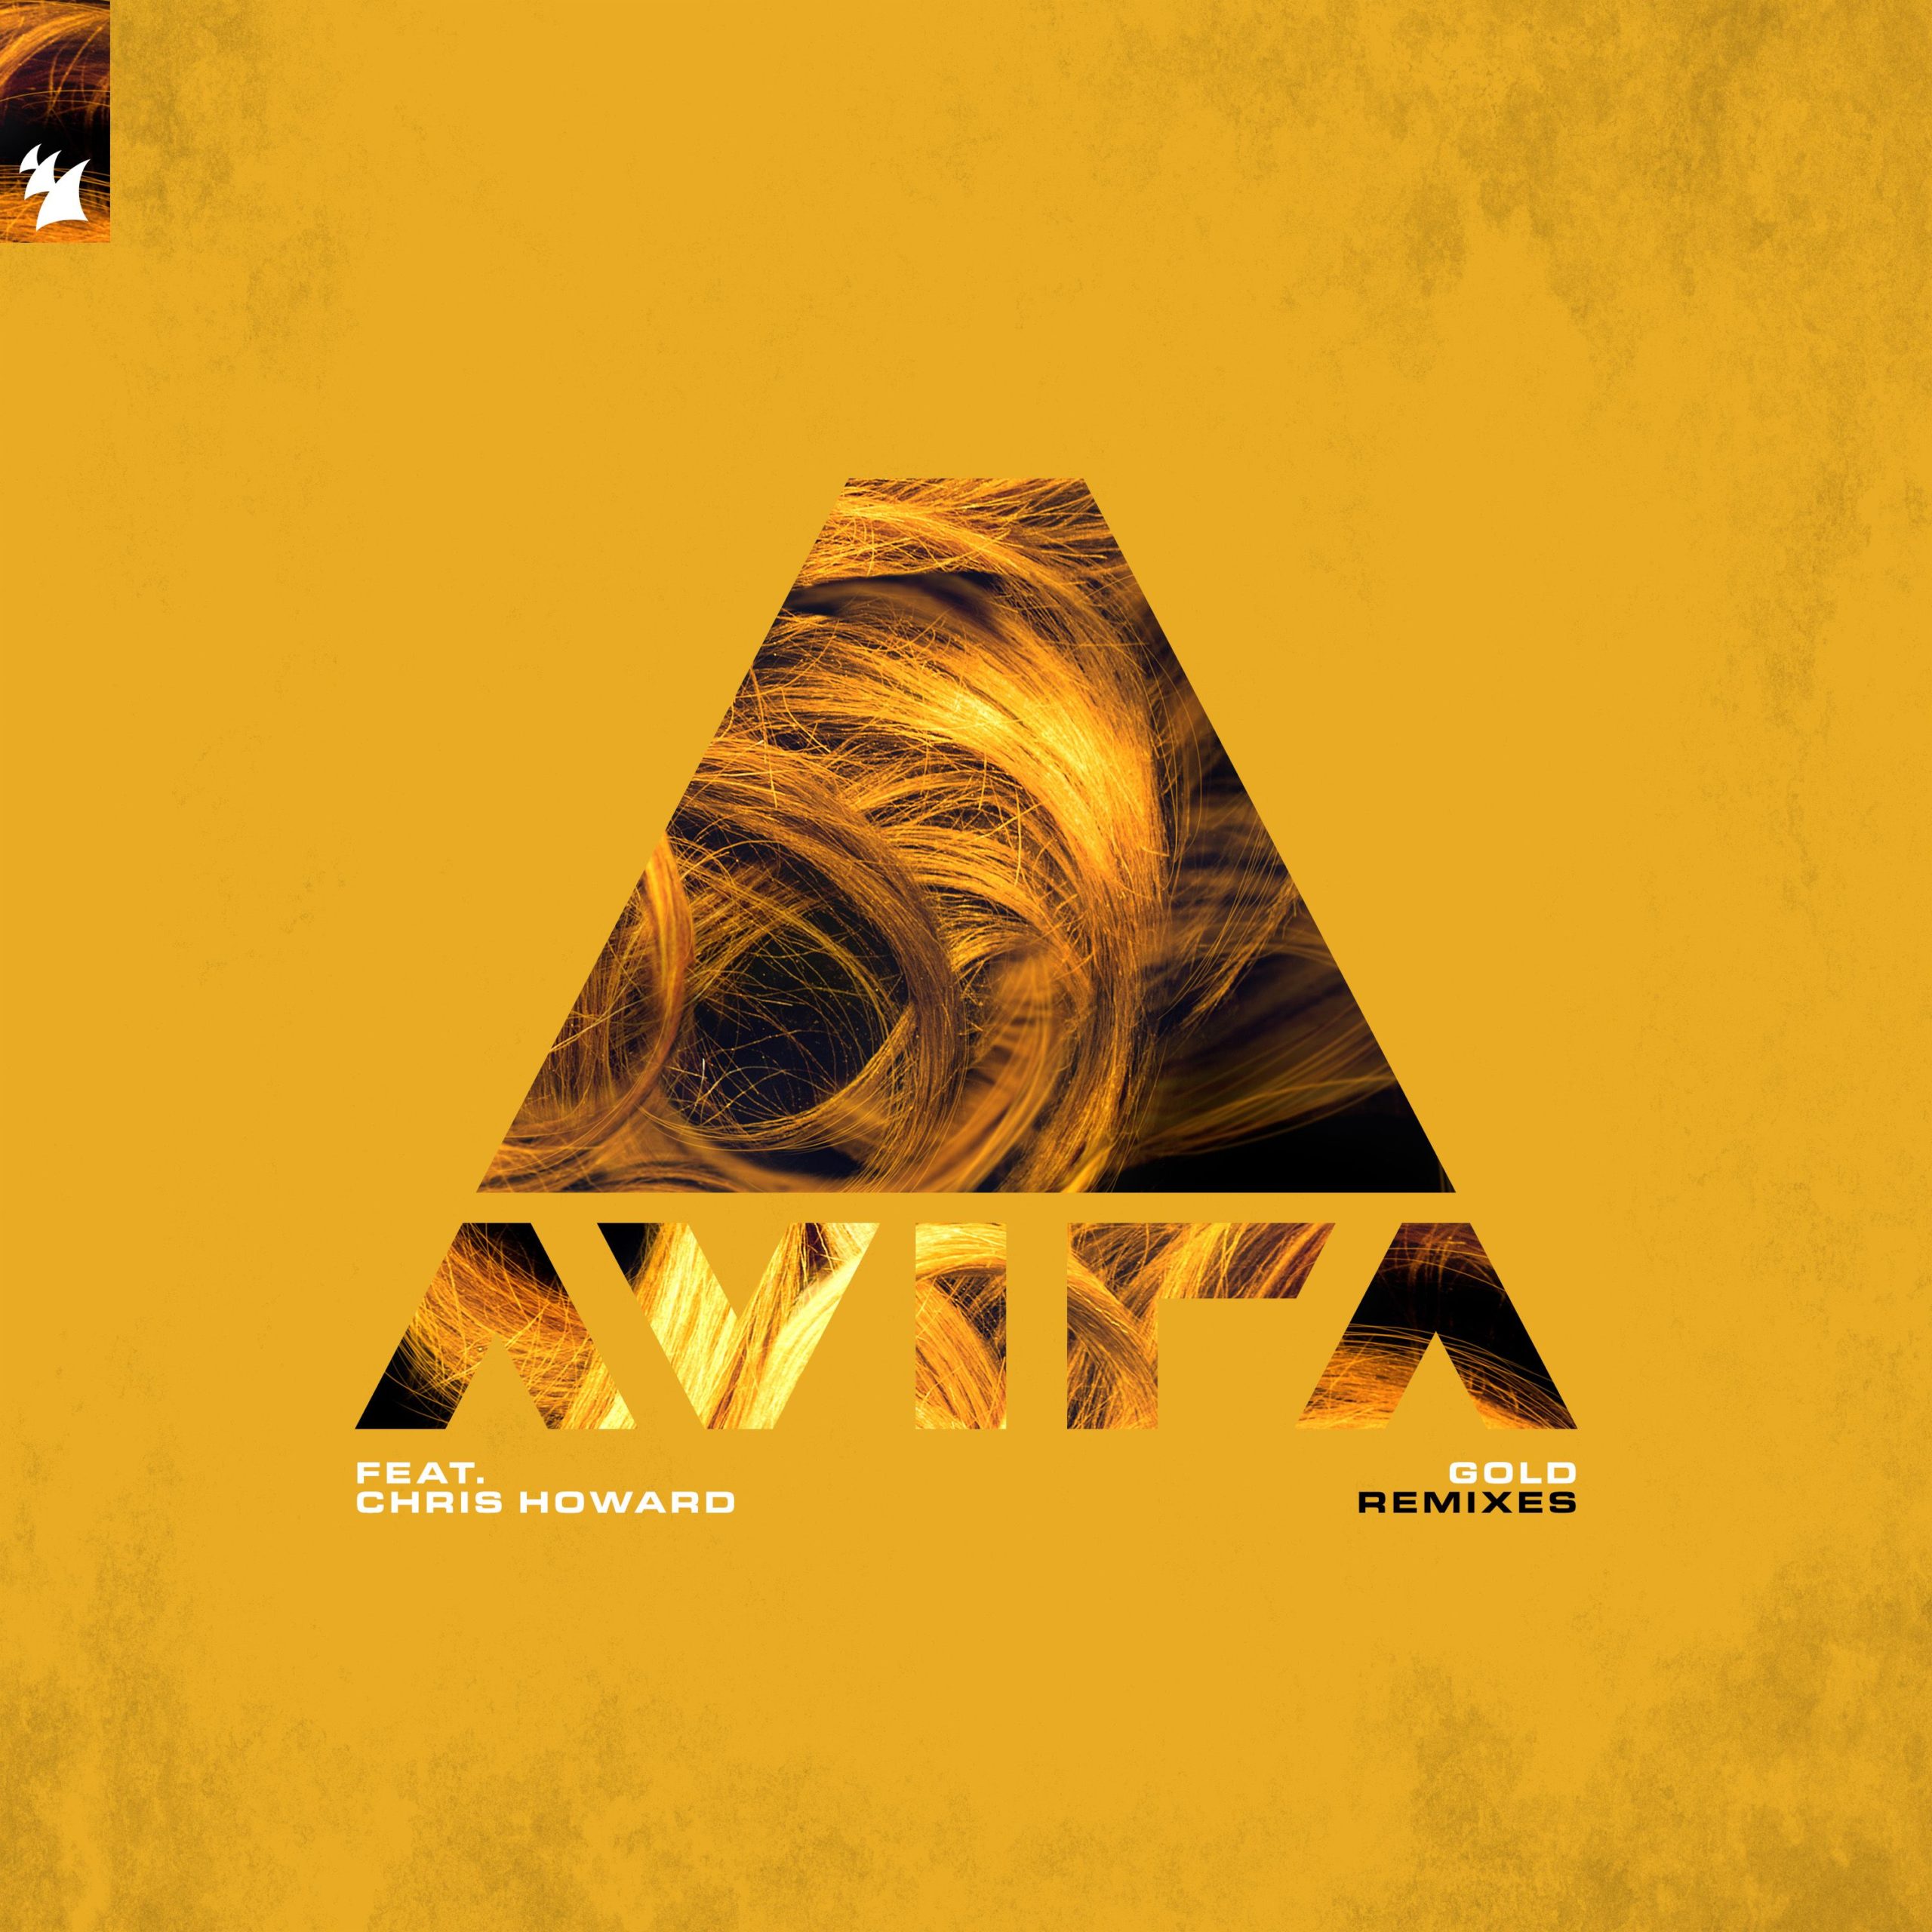 AVIRA feat. Chris Howard presents Gold (Remixes) on Armada Music